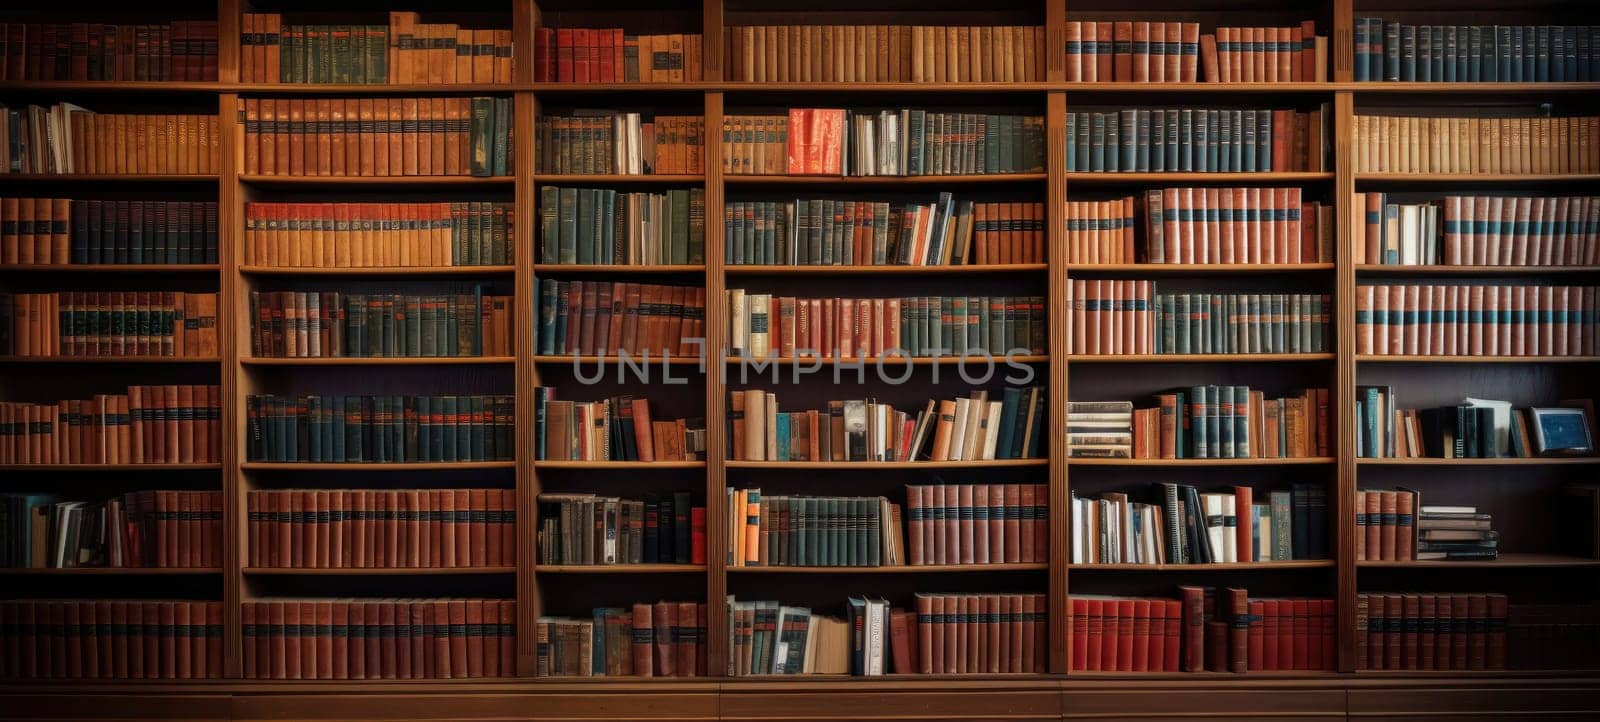 Classic Library Bookshelf Full of Books by andreyz